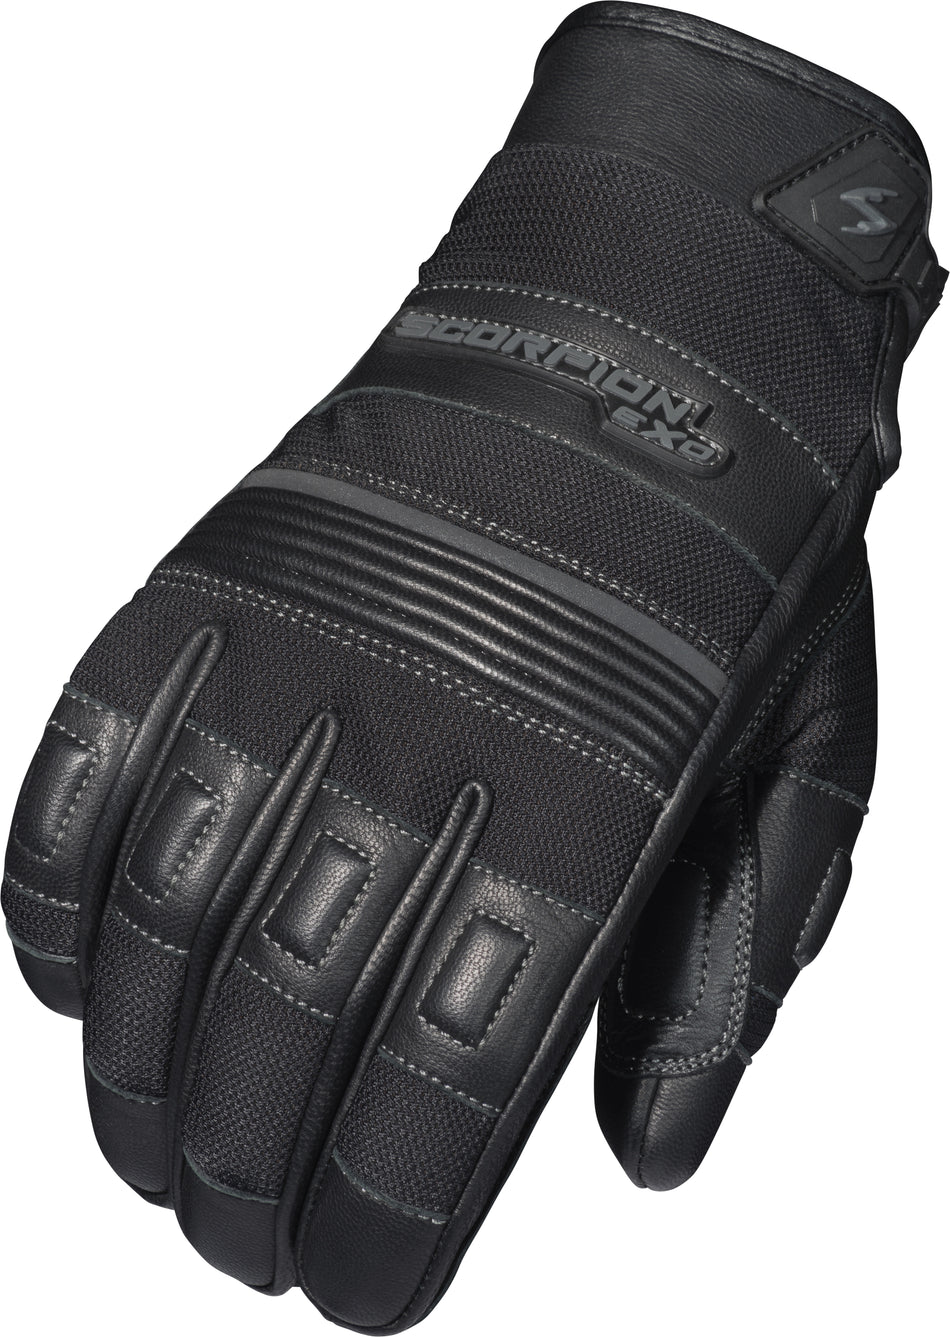 SCORPION EXO Abrams Gloves Black Sm G35-033